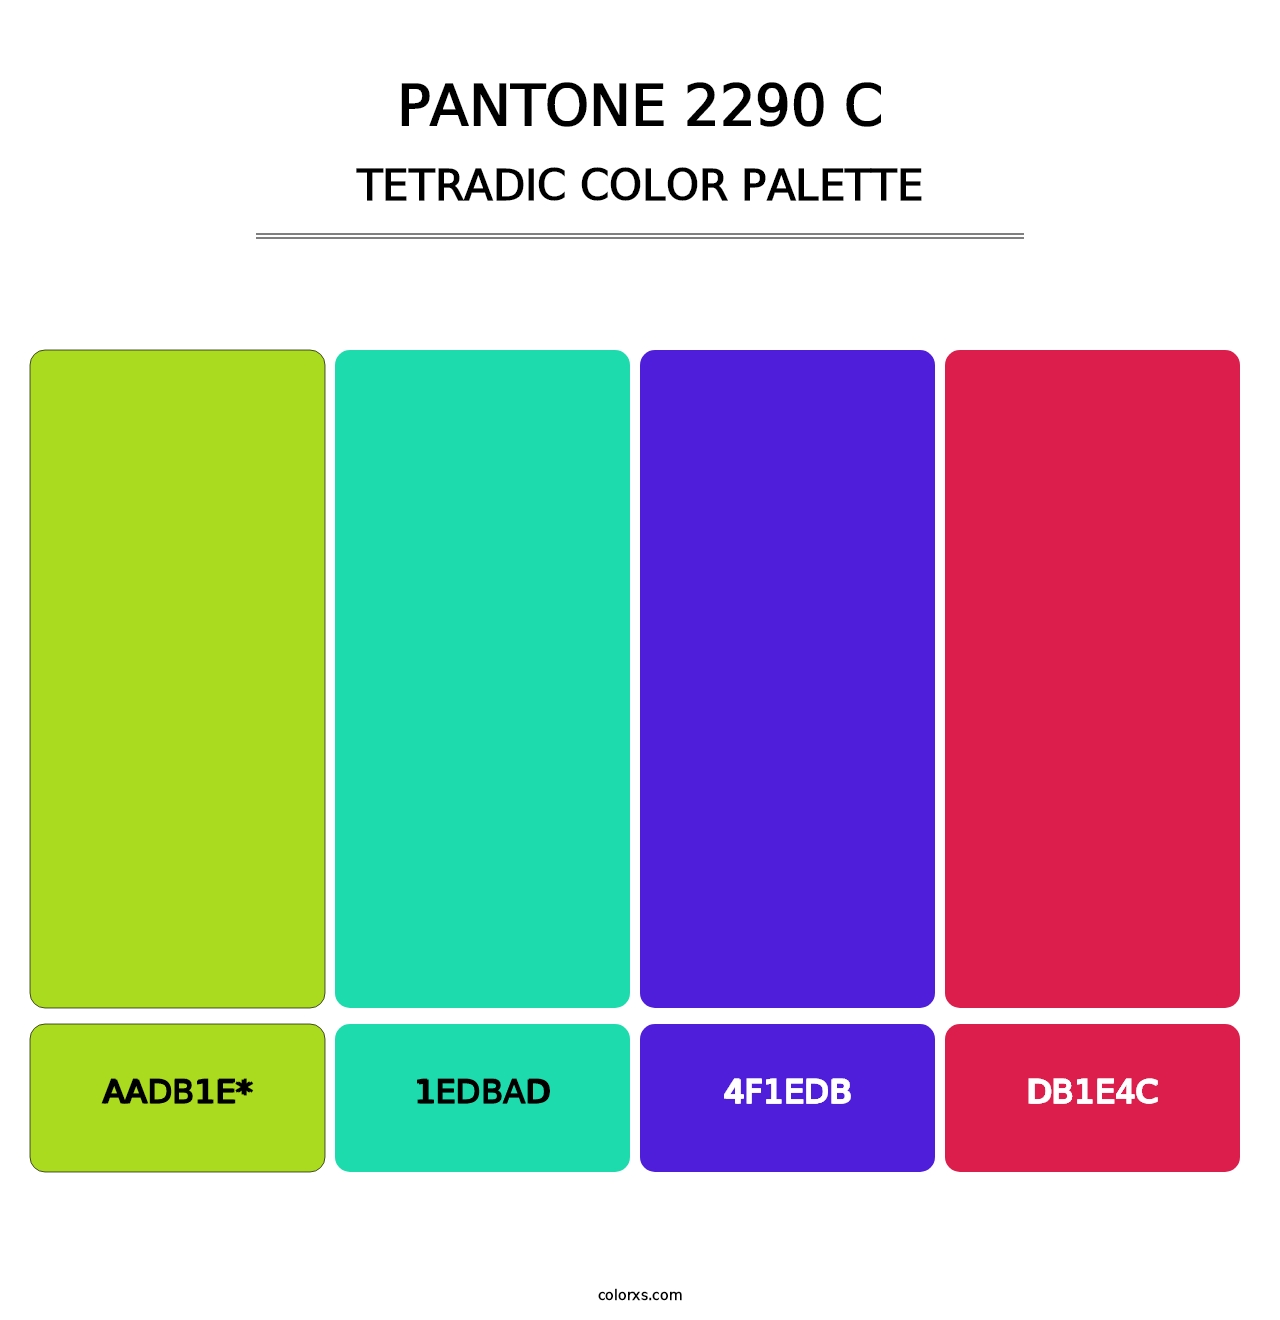 PANTONE 2290 C - Tetradic Color Palette